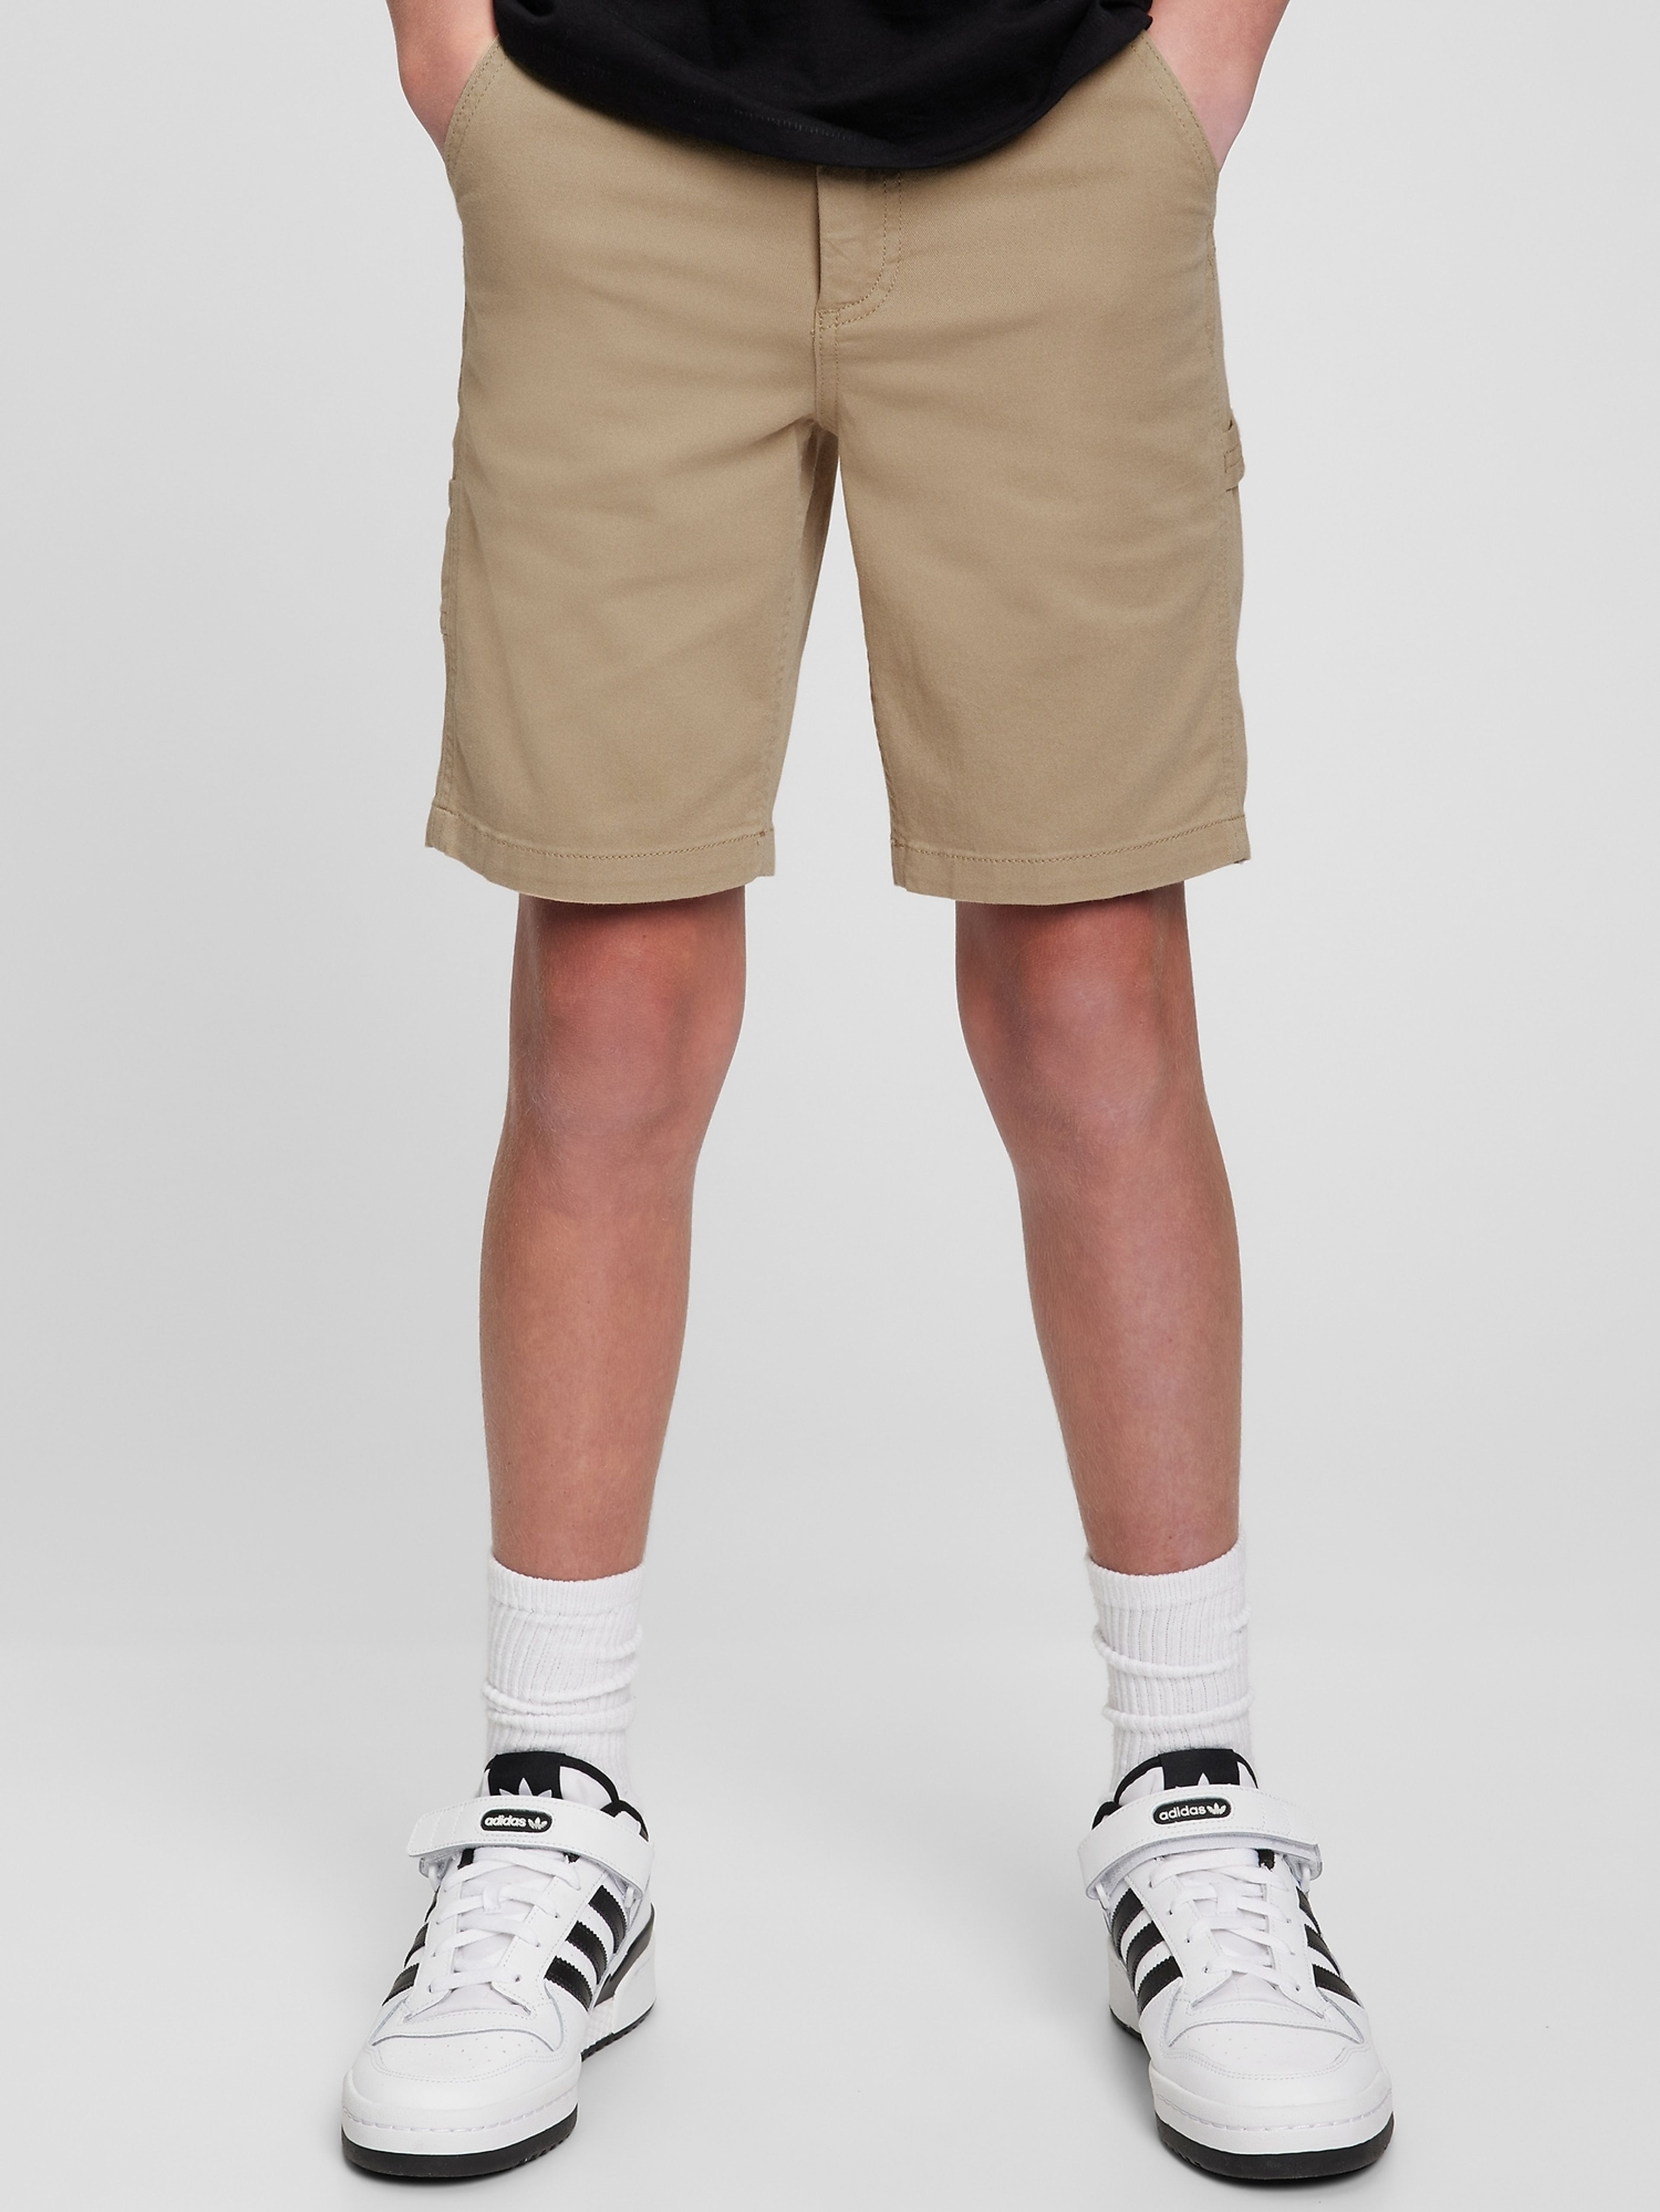 Gewebte Unifarbene Teen Shorts